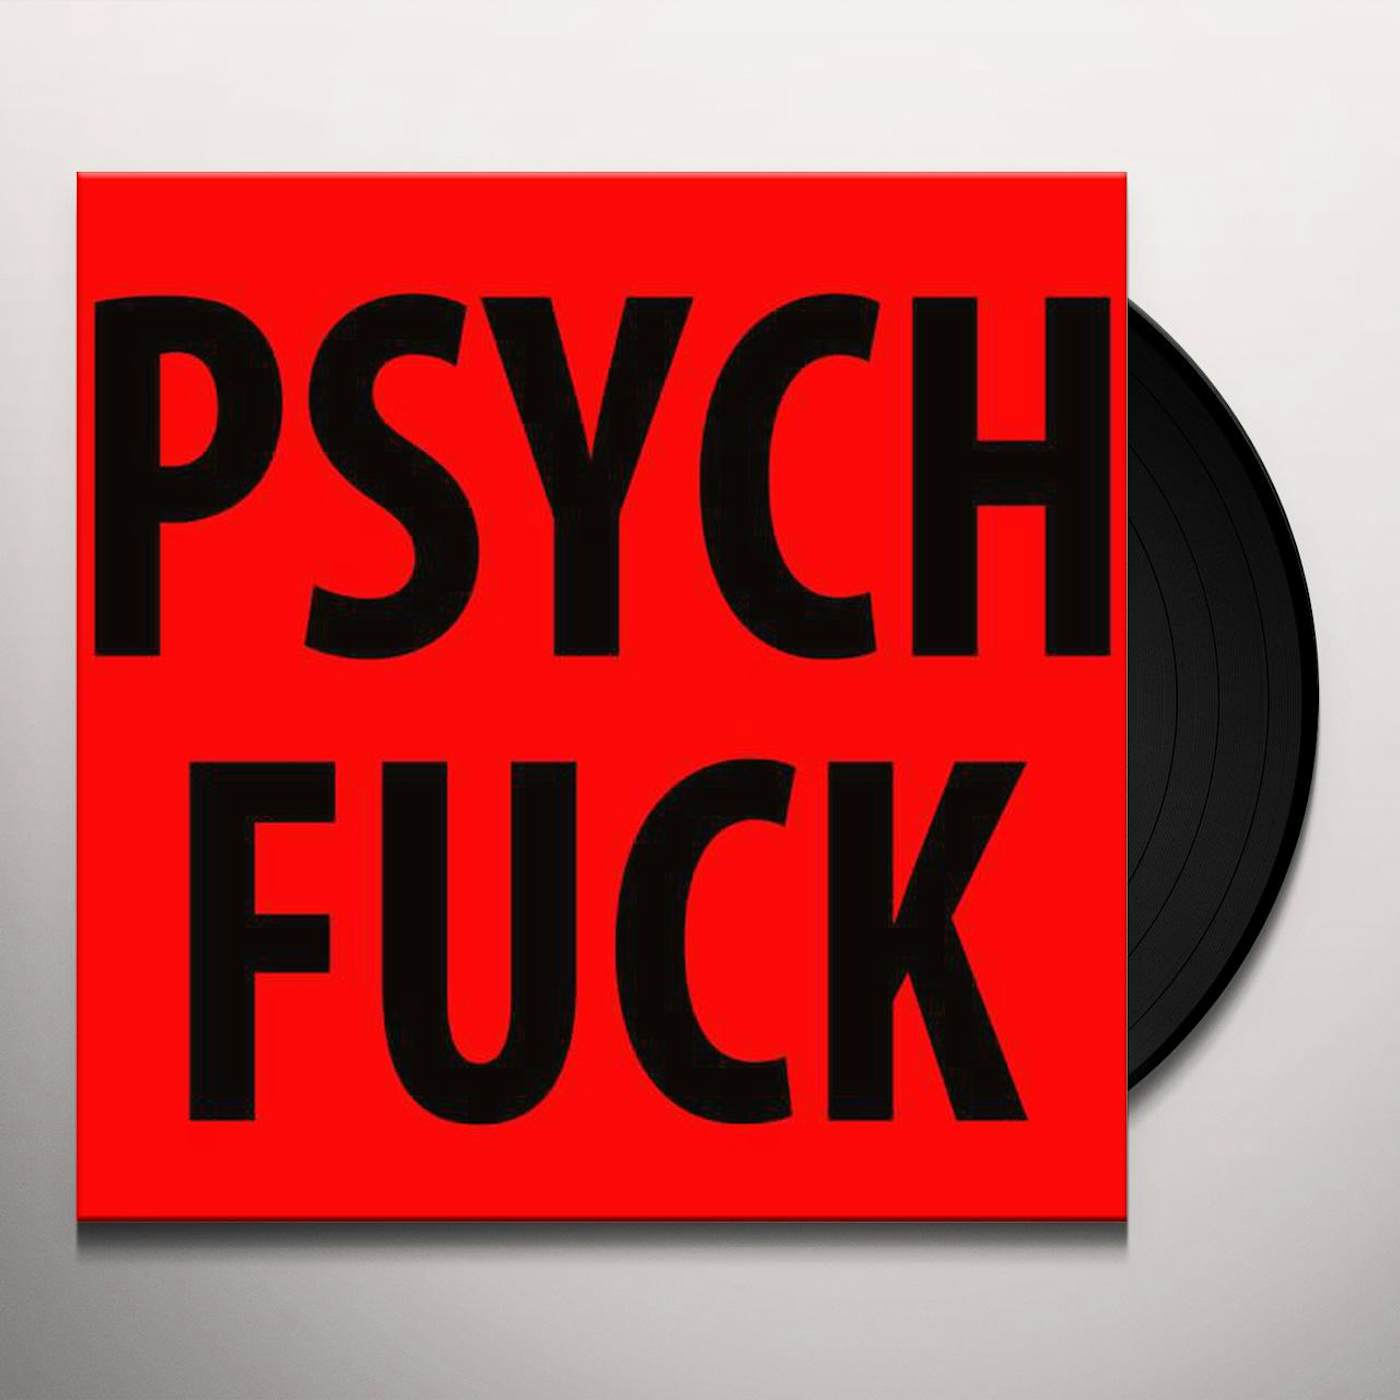 Singapore Sling Psych Fuck Vinyl Record